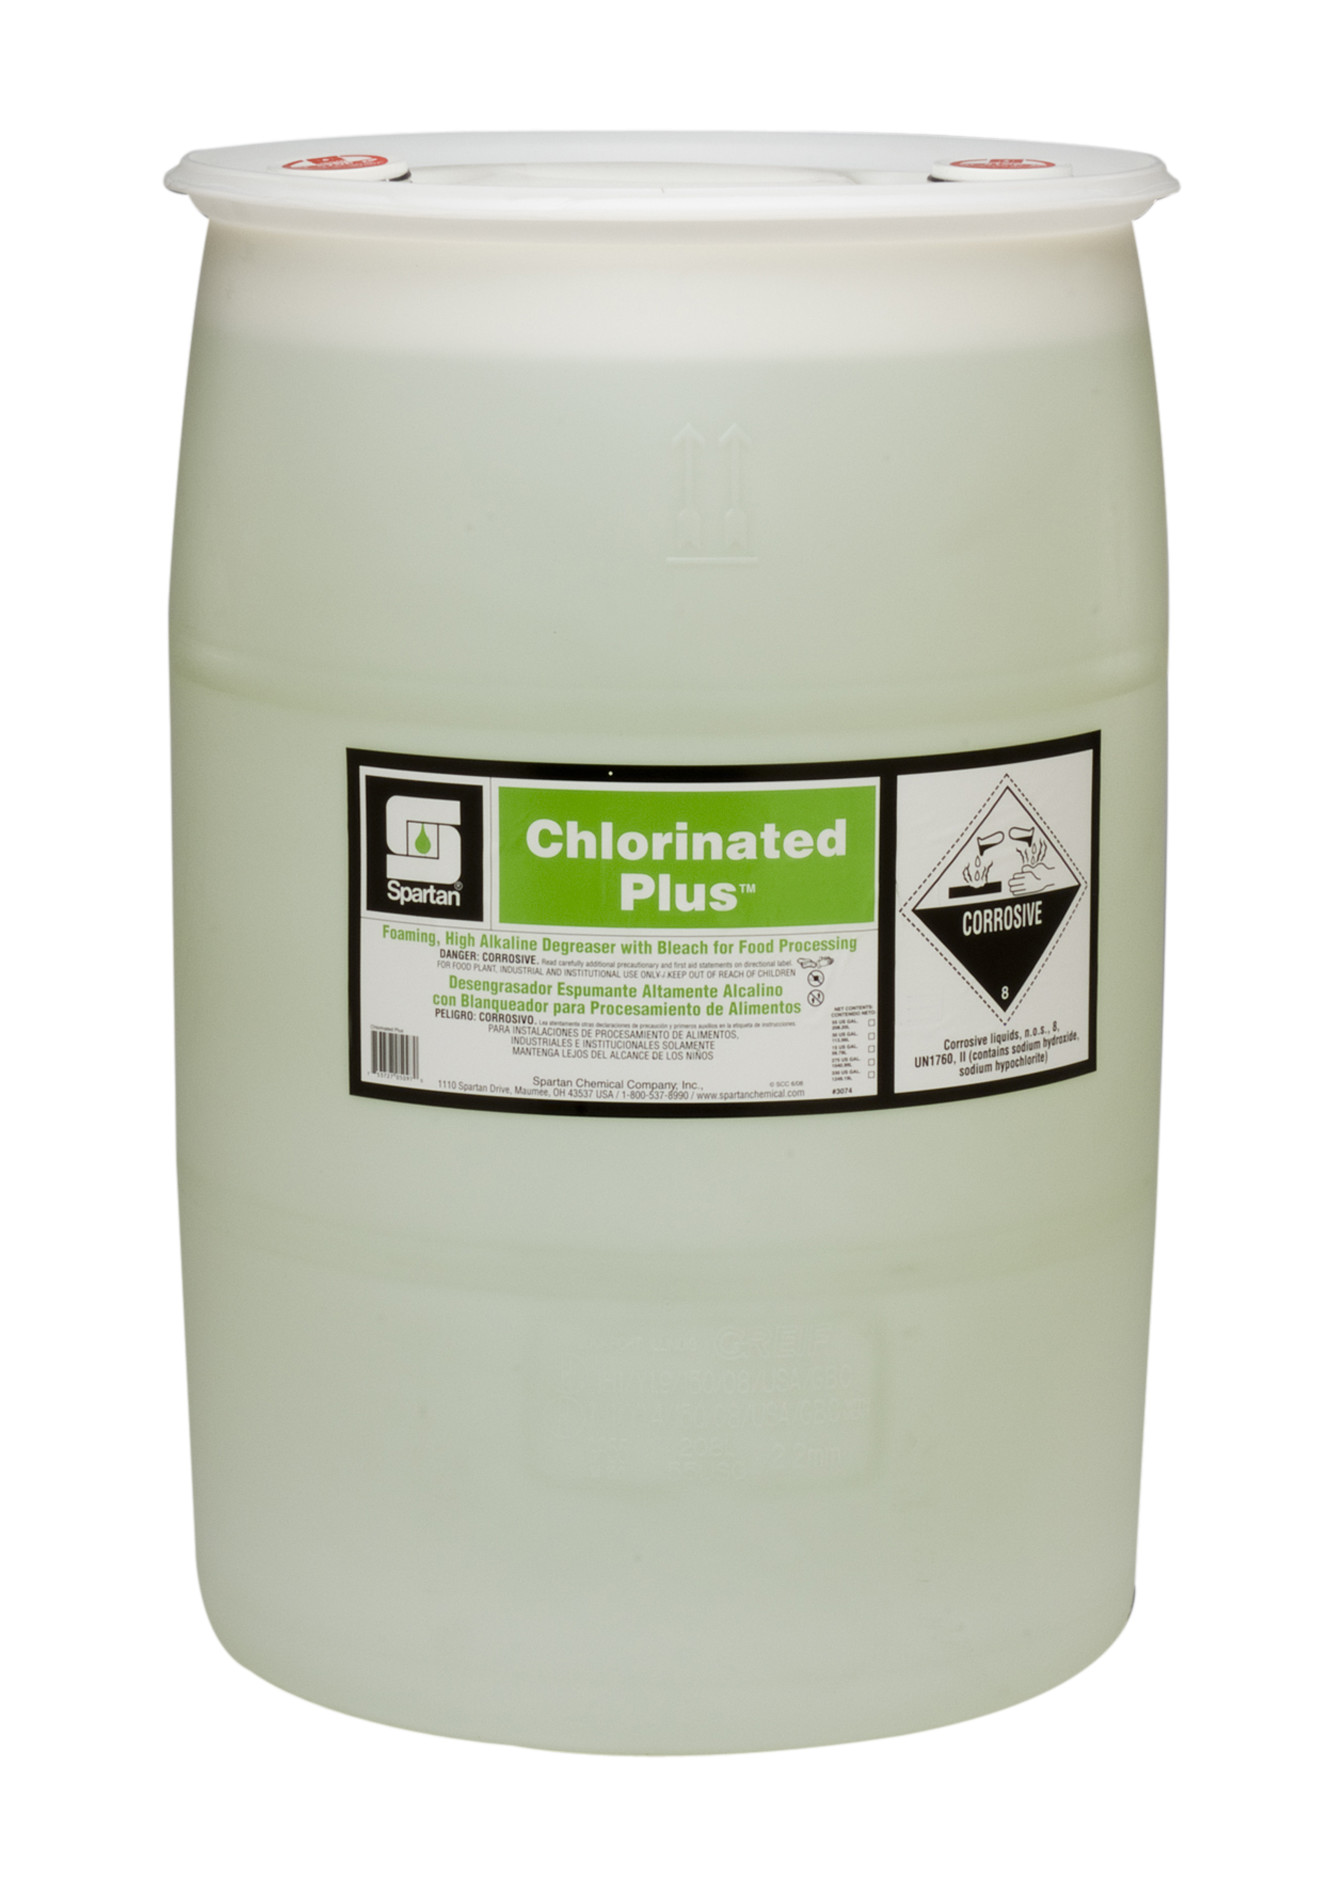 Spartan Chemical Company Chlorinated Plus, 55 GAL DRUM